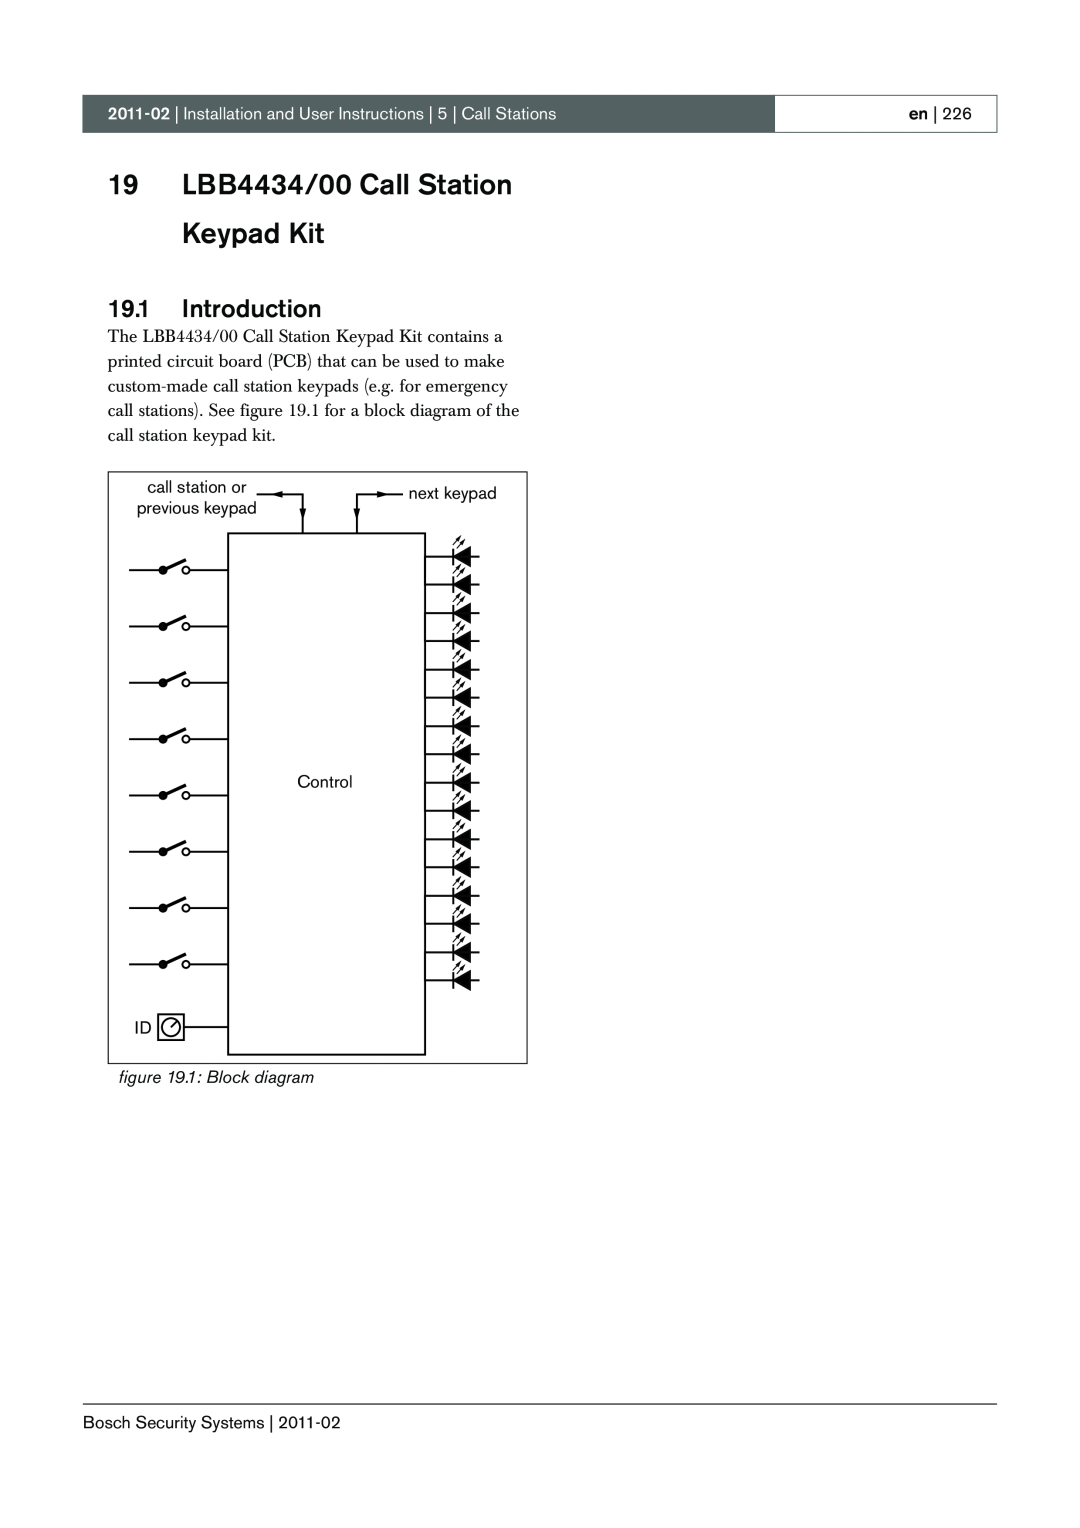 Bosch Appliances 3.5 manual 19LBB4434/00 Call Station Keypad Kit, 19.1Introduction, 1: Block diagram 